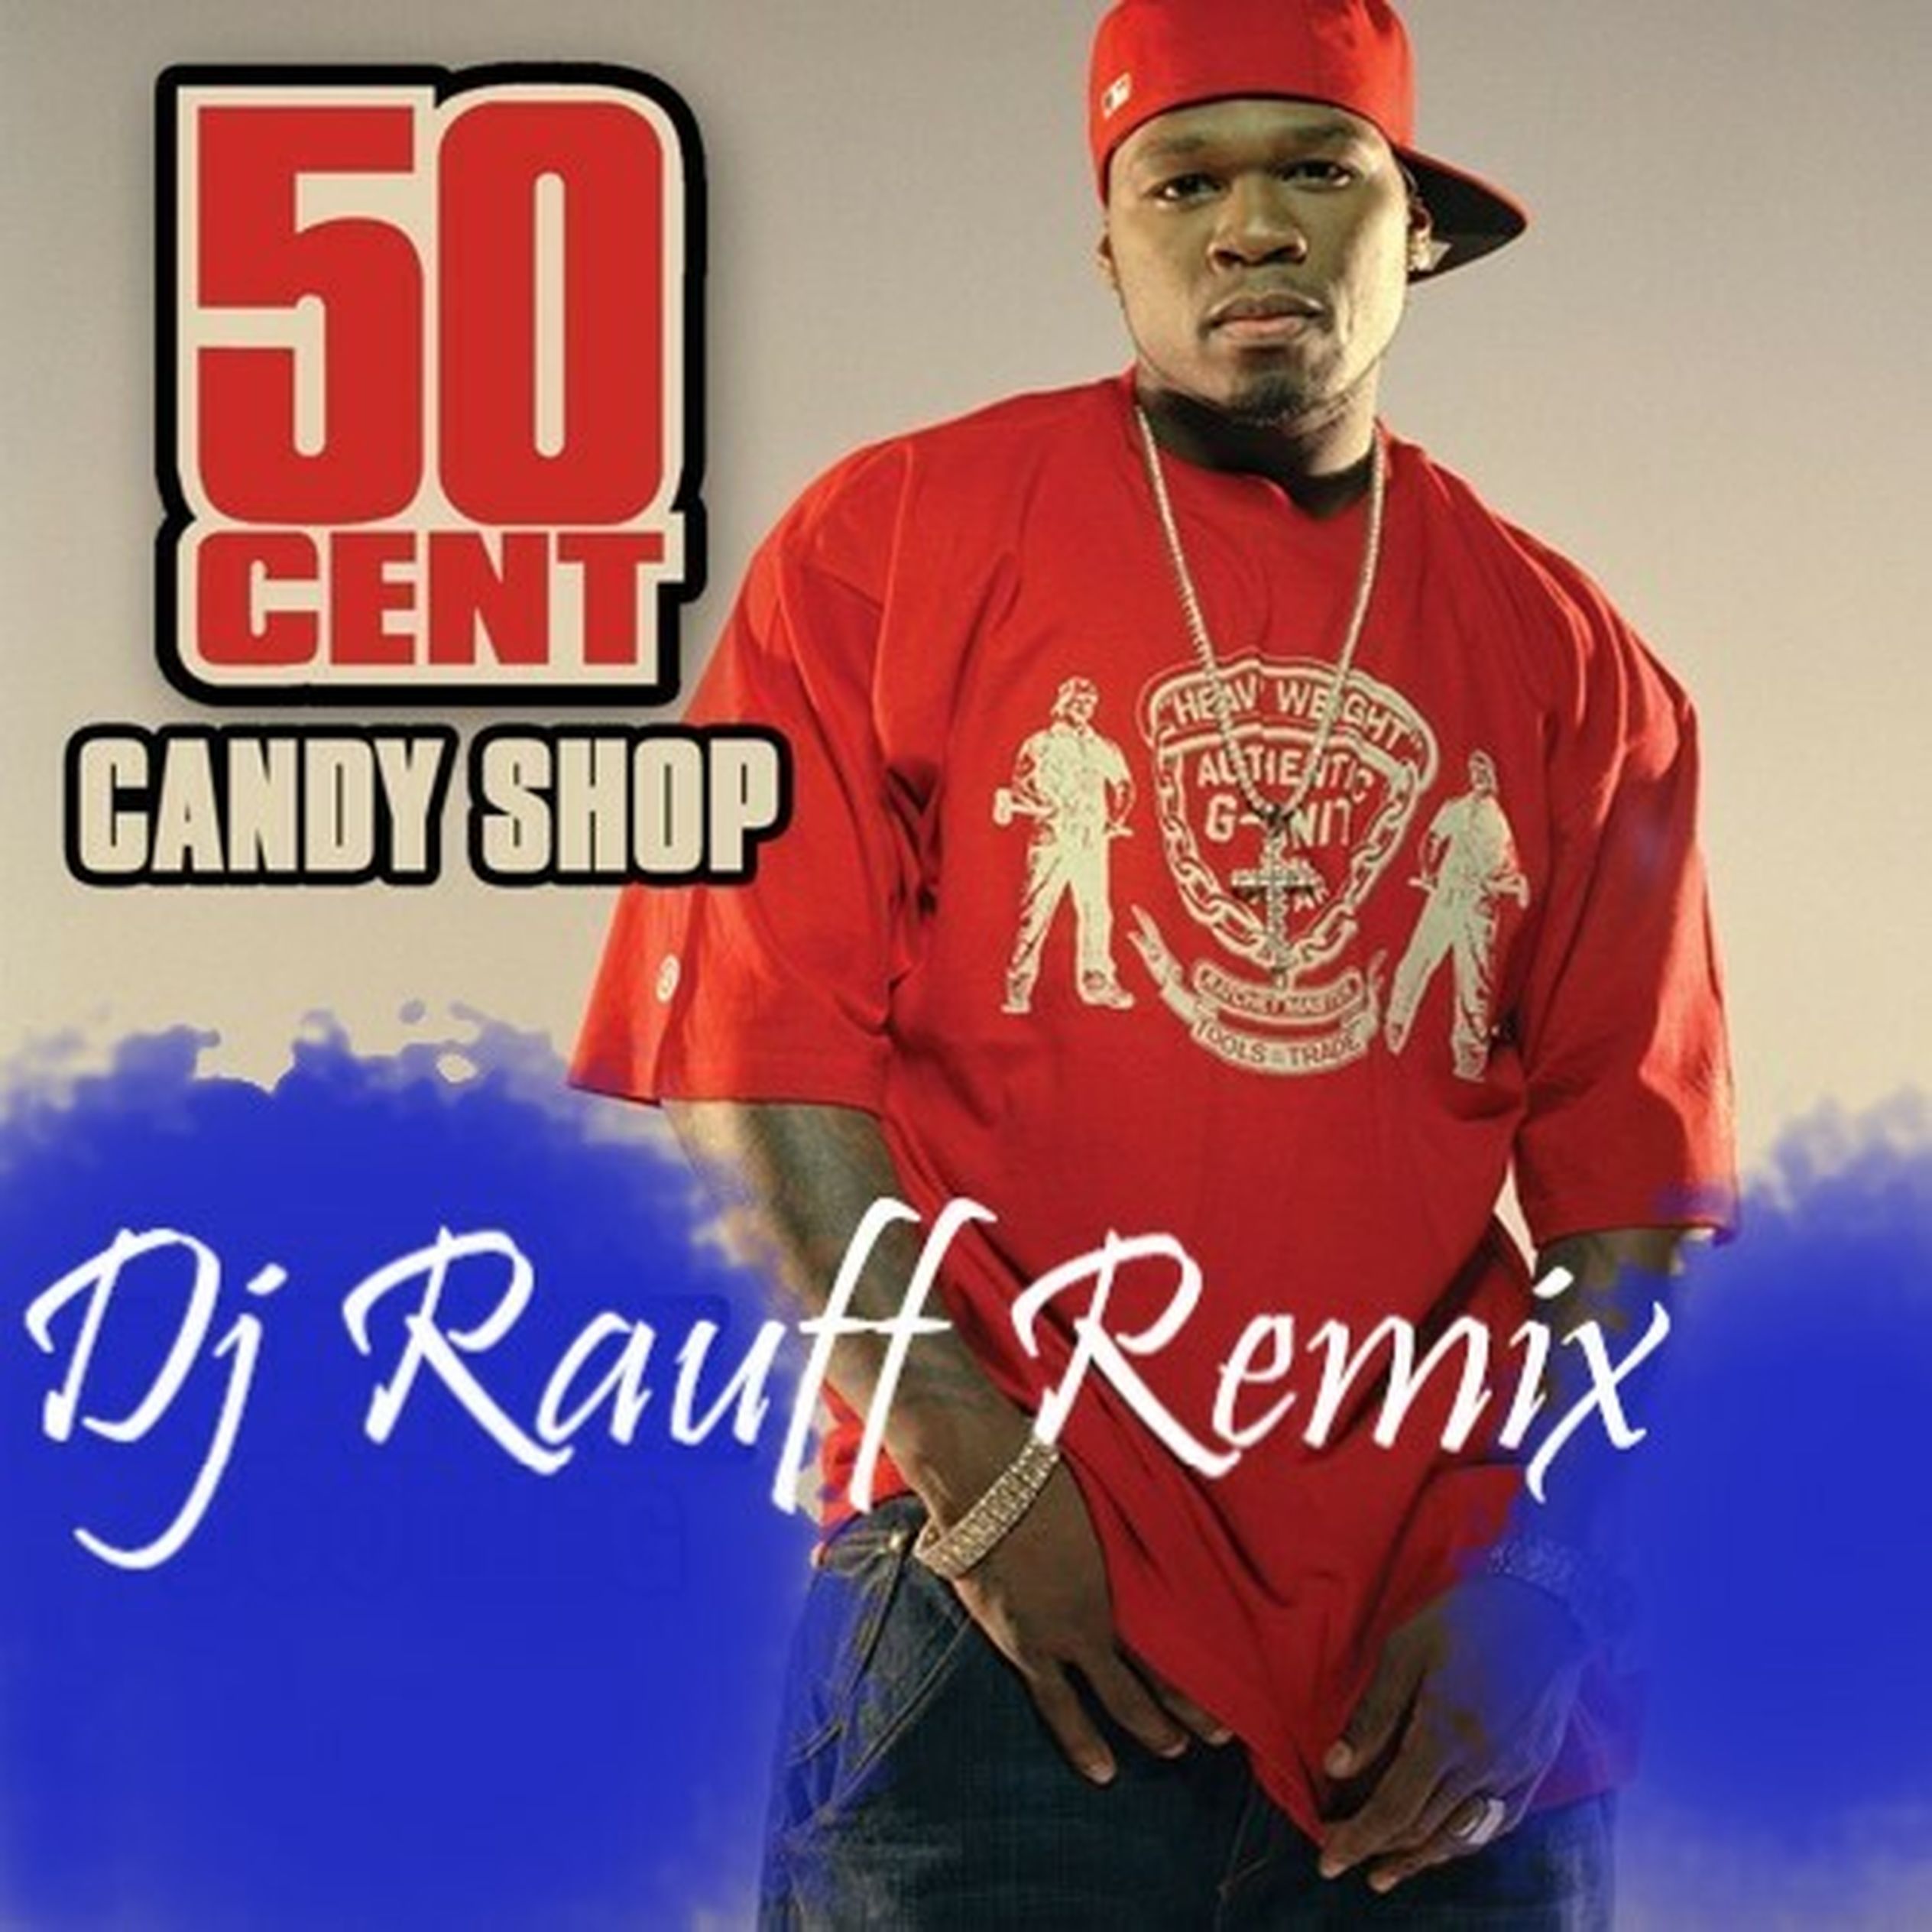 50 сент кэнди. 50 Cent - Candy shop альбом. 50 Сент Кэнди шоп. DJ Rauff. 50 Cent Candy shop Remix Bass.